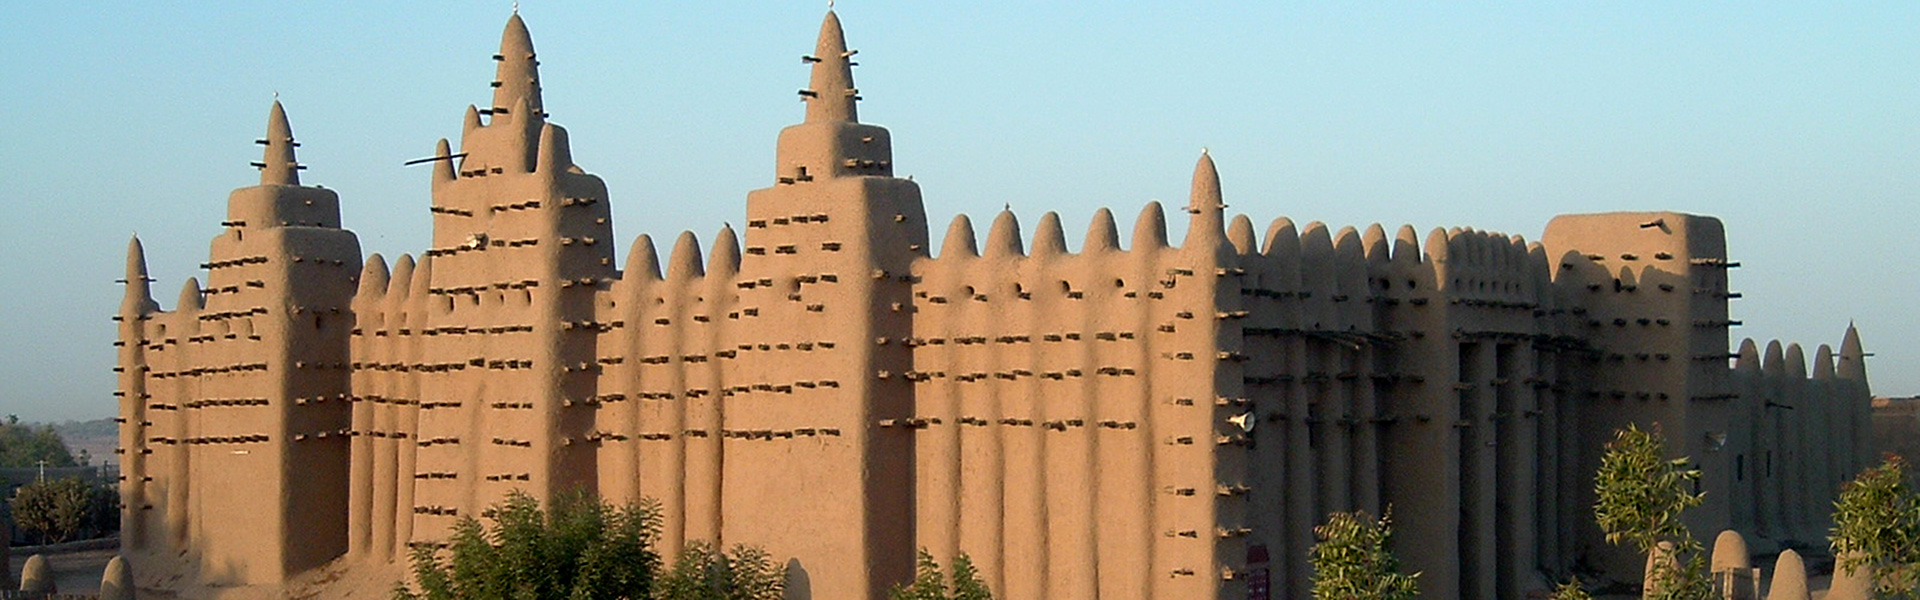 mali-djenne-mosque--photo-anne-david-cc-pdm-1